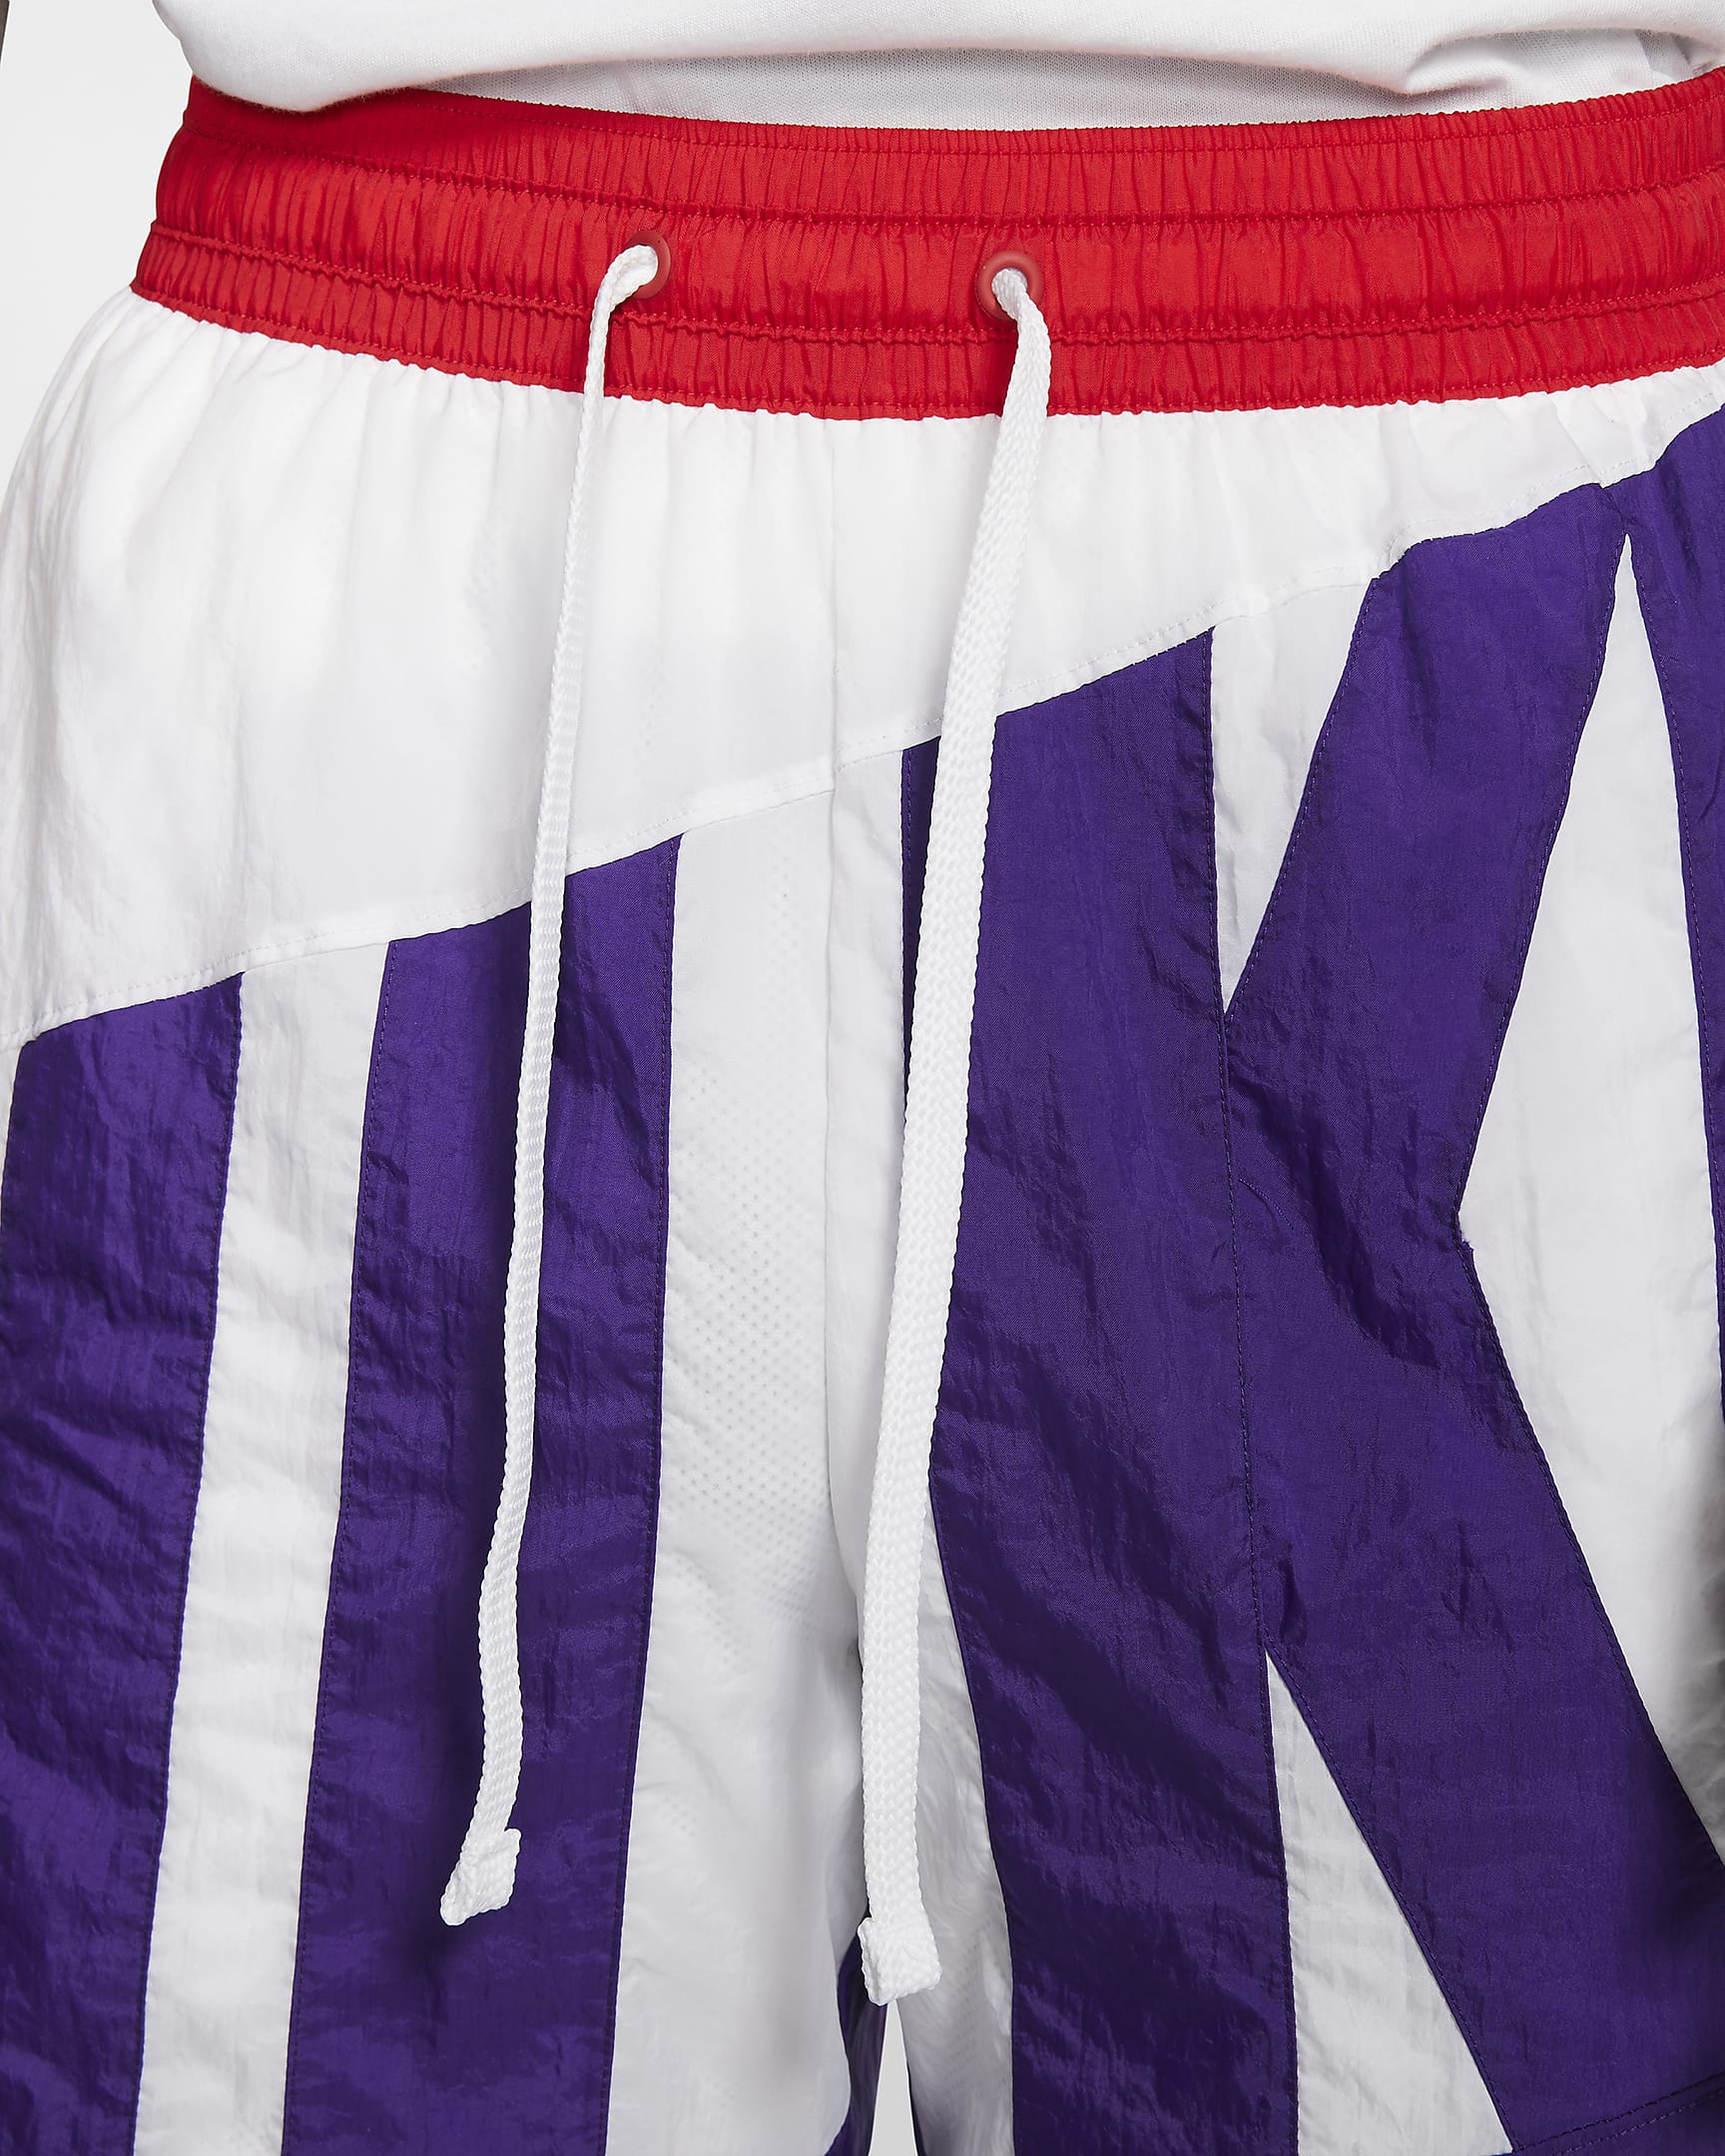 Nike Dri-FIT Throwback Basketball Shorts. Nike PH